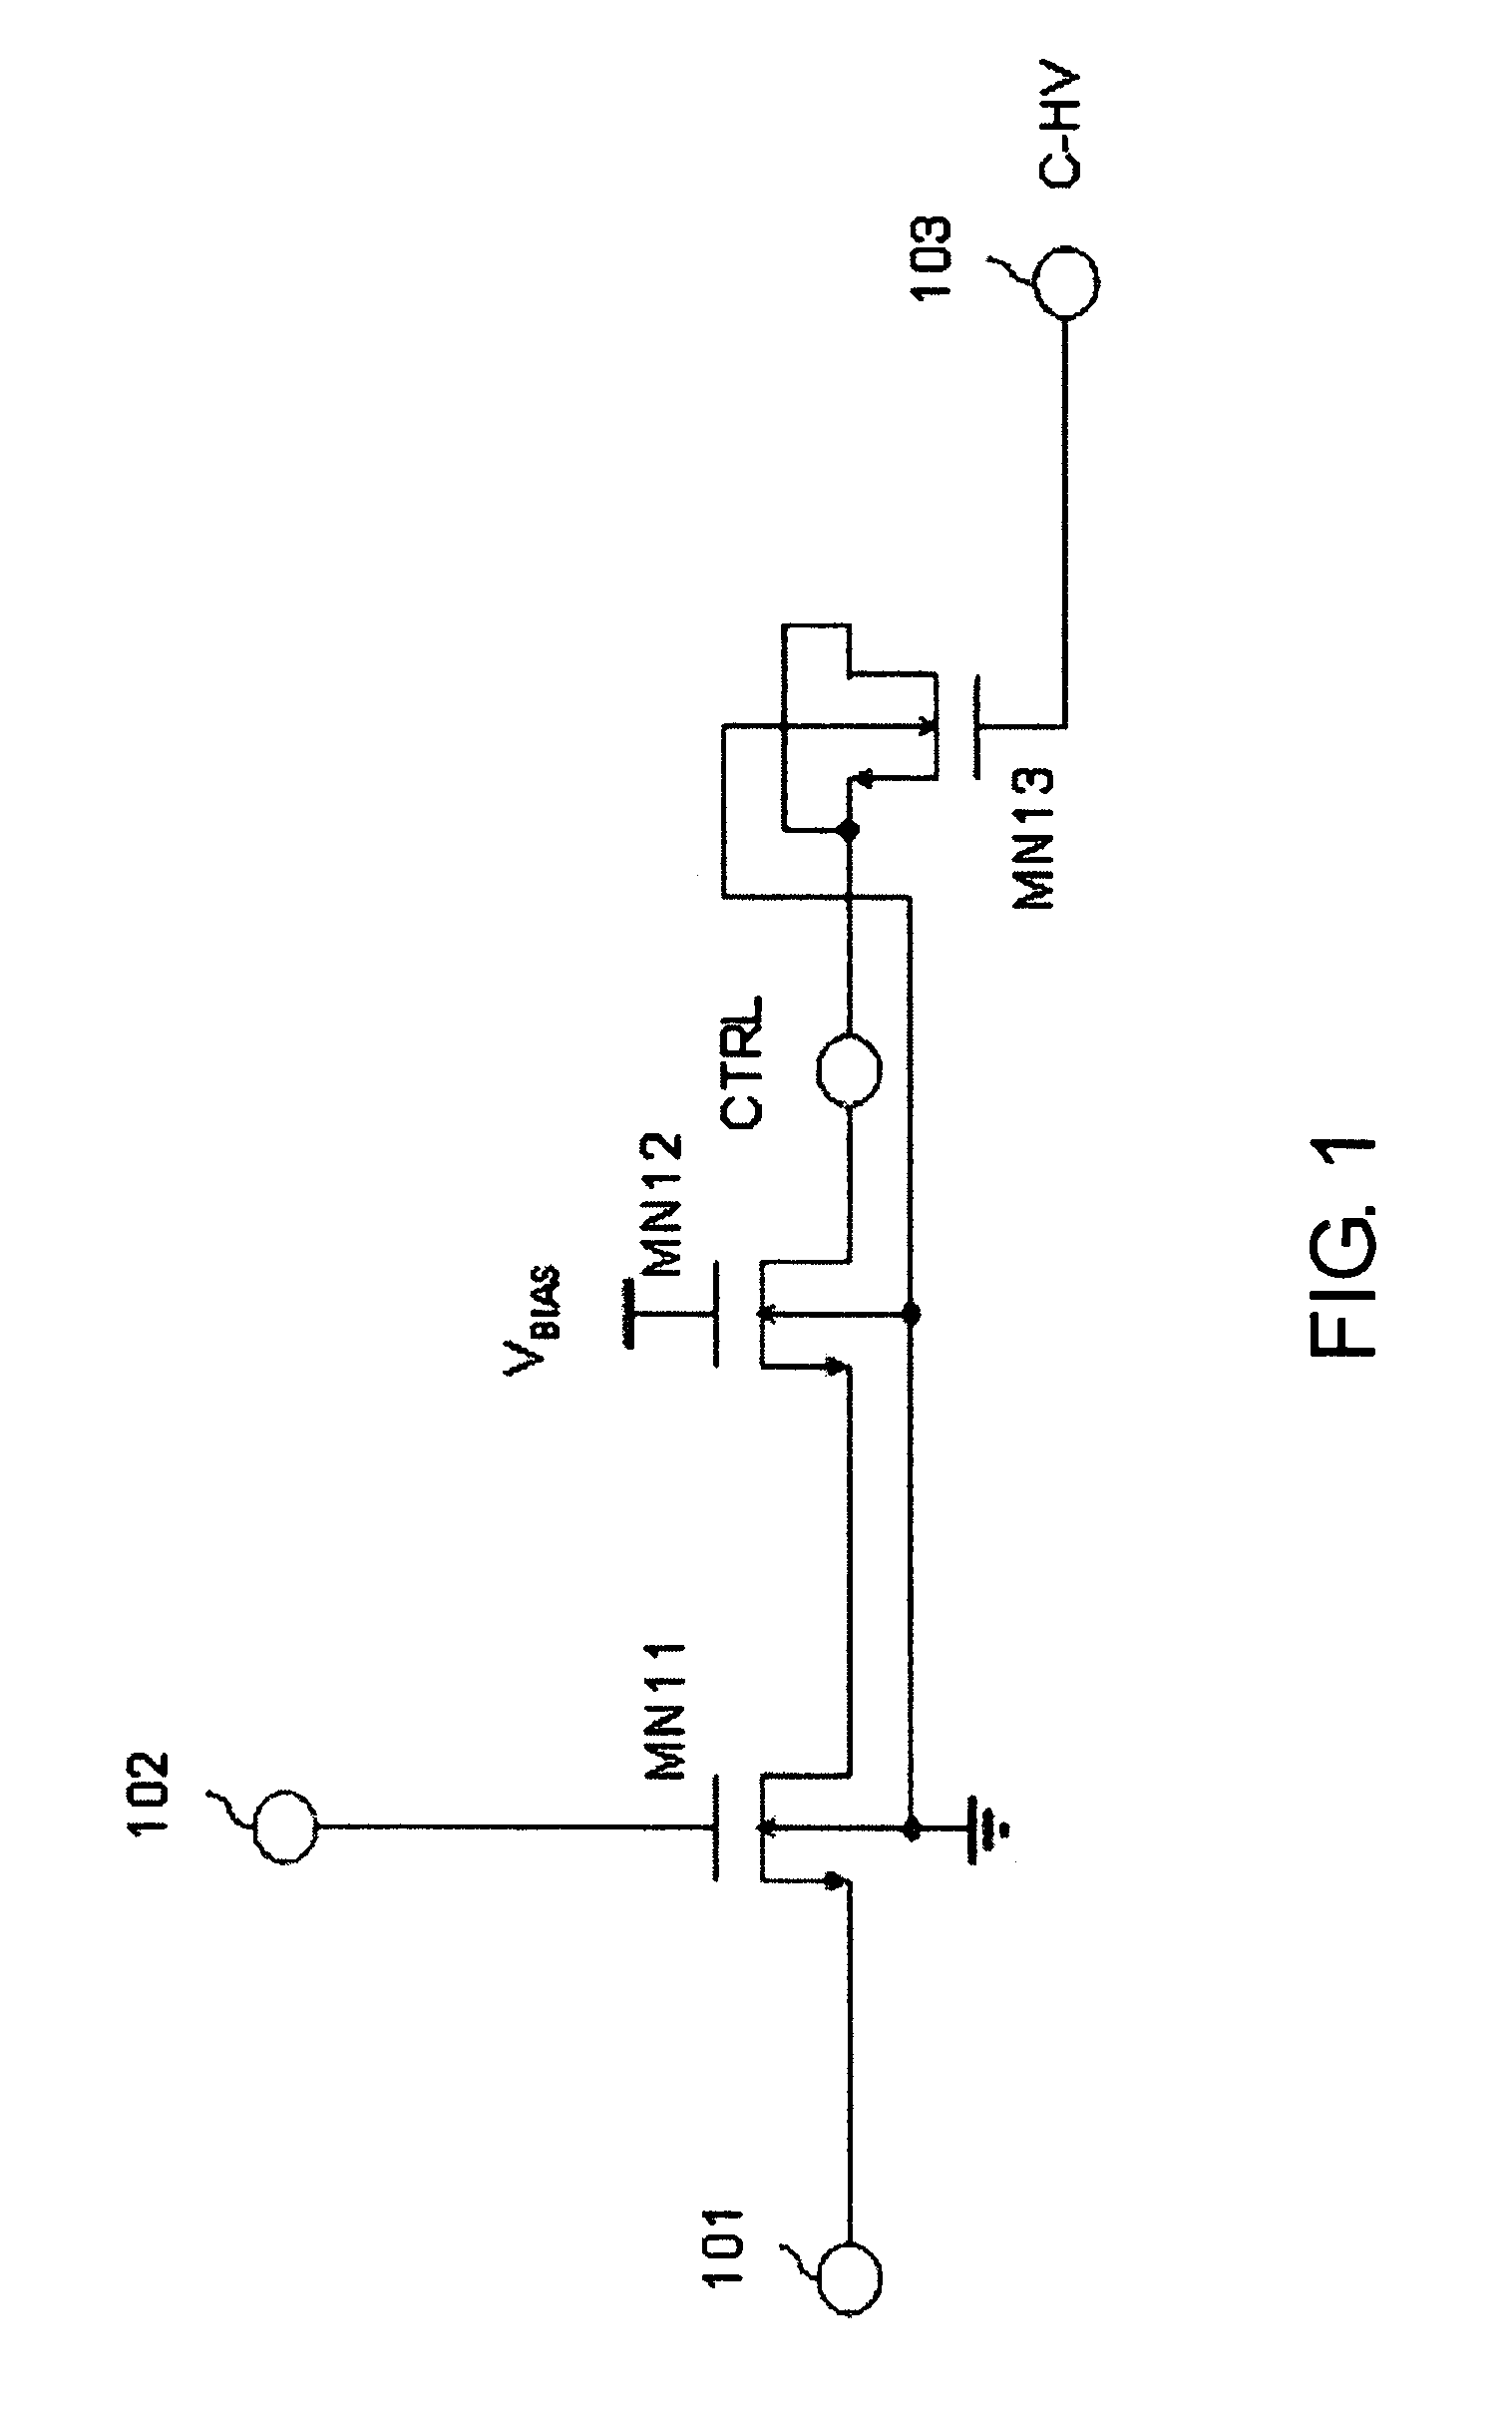 3-transistor OTP ROM using CMOS gate oxide antifuse